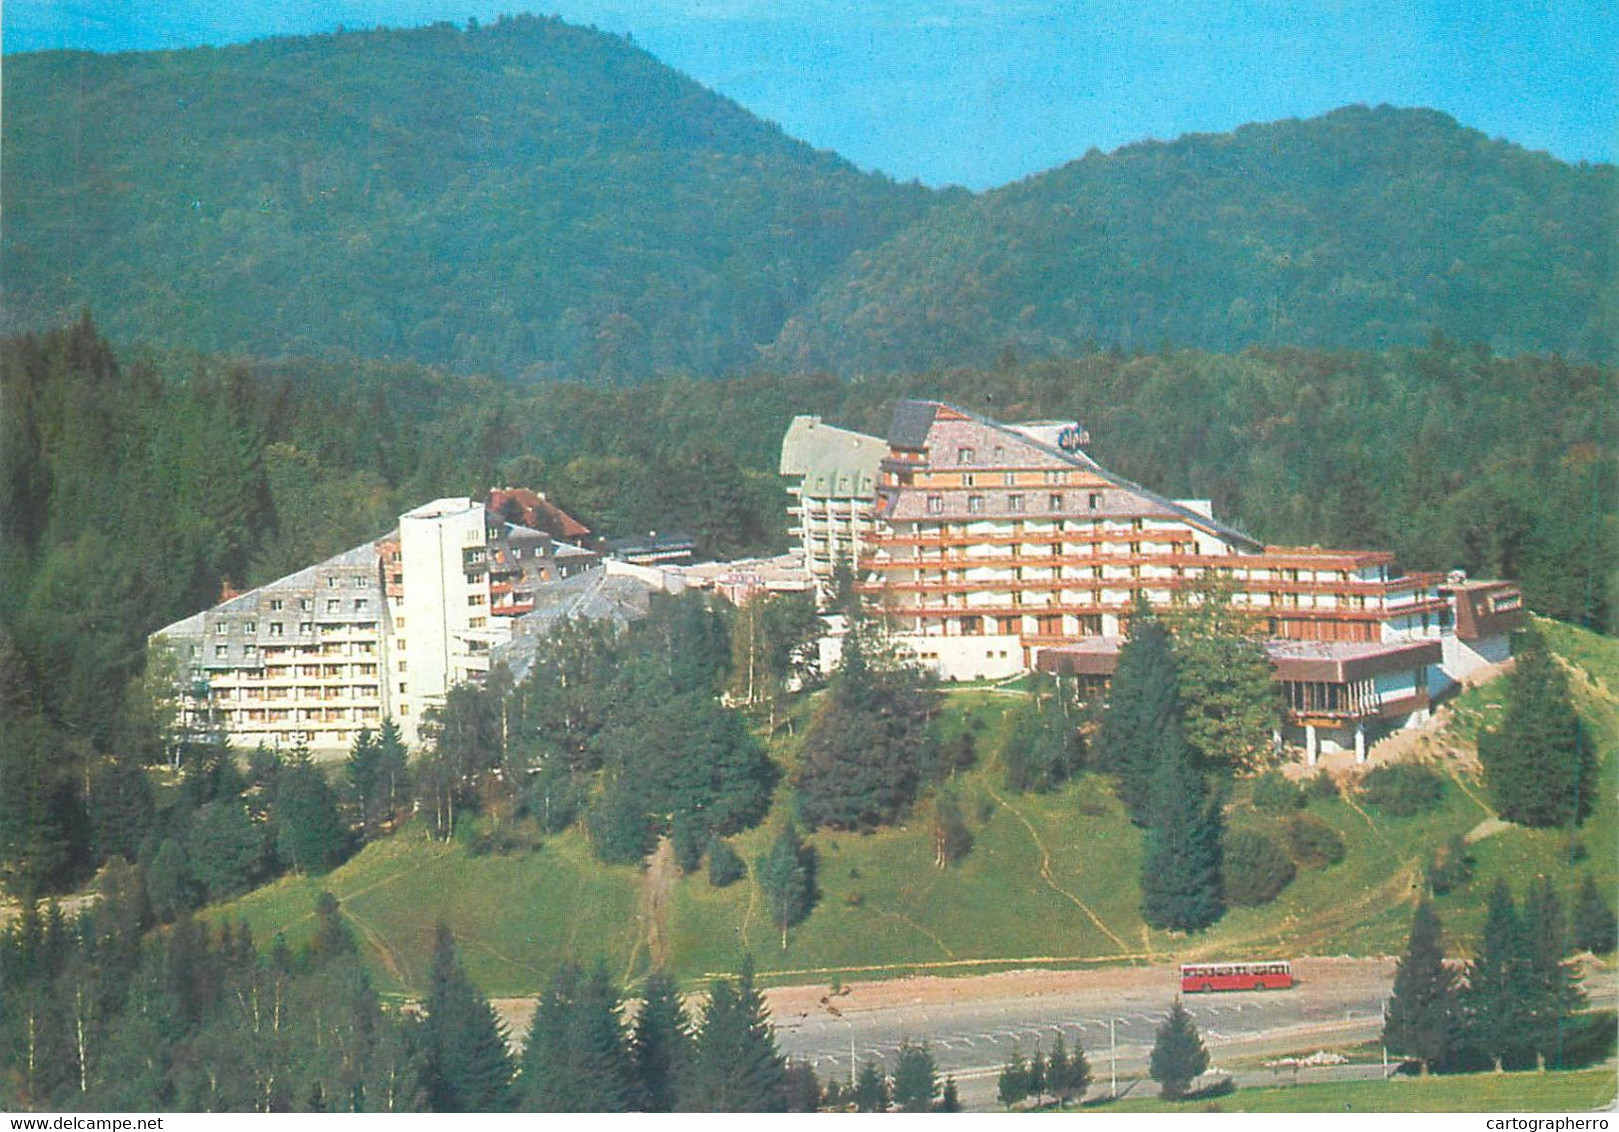 Council Award kitchen Romania - Romania Poiana Brasov Hotel Ciucas Hotel Alpin 1988 Carpathian  Mountains Transylvania postcard